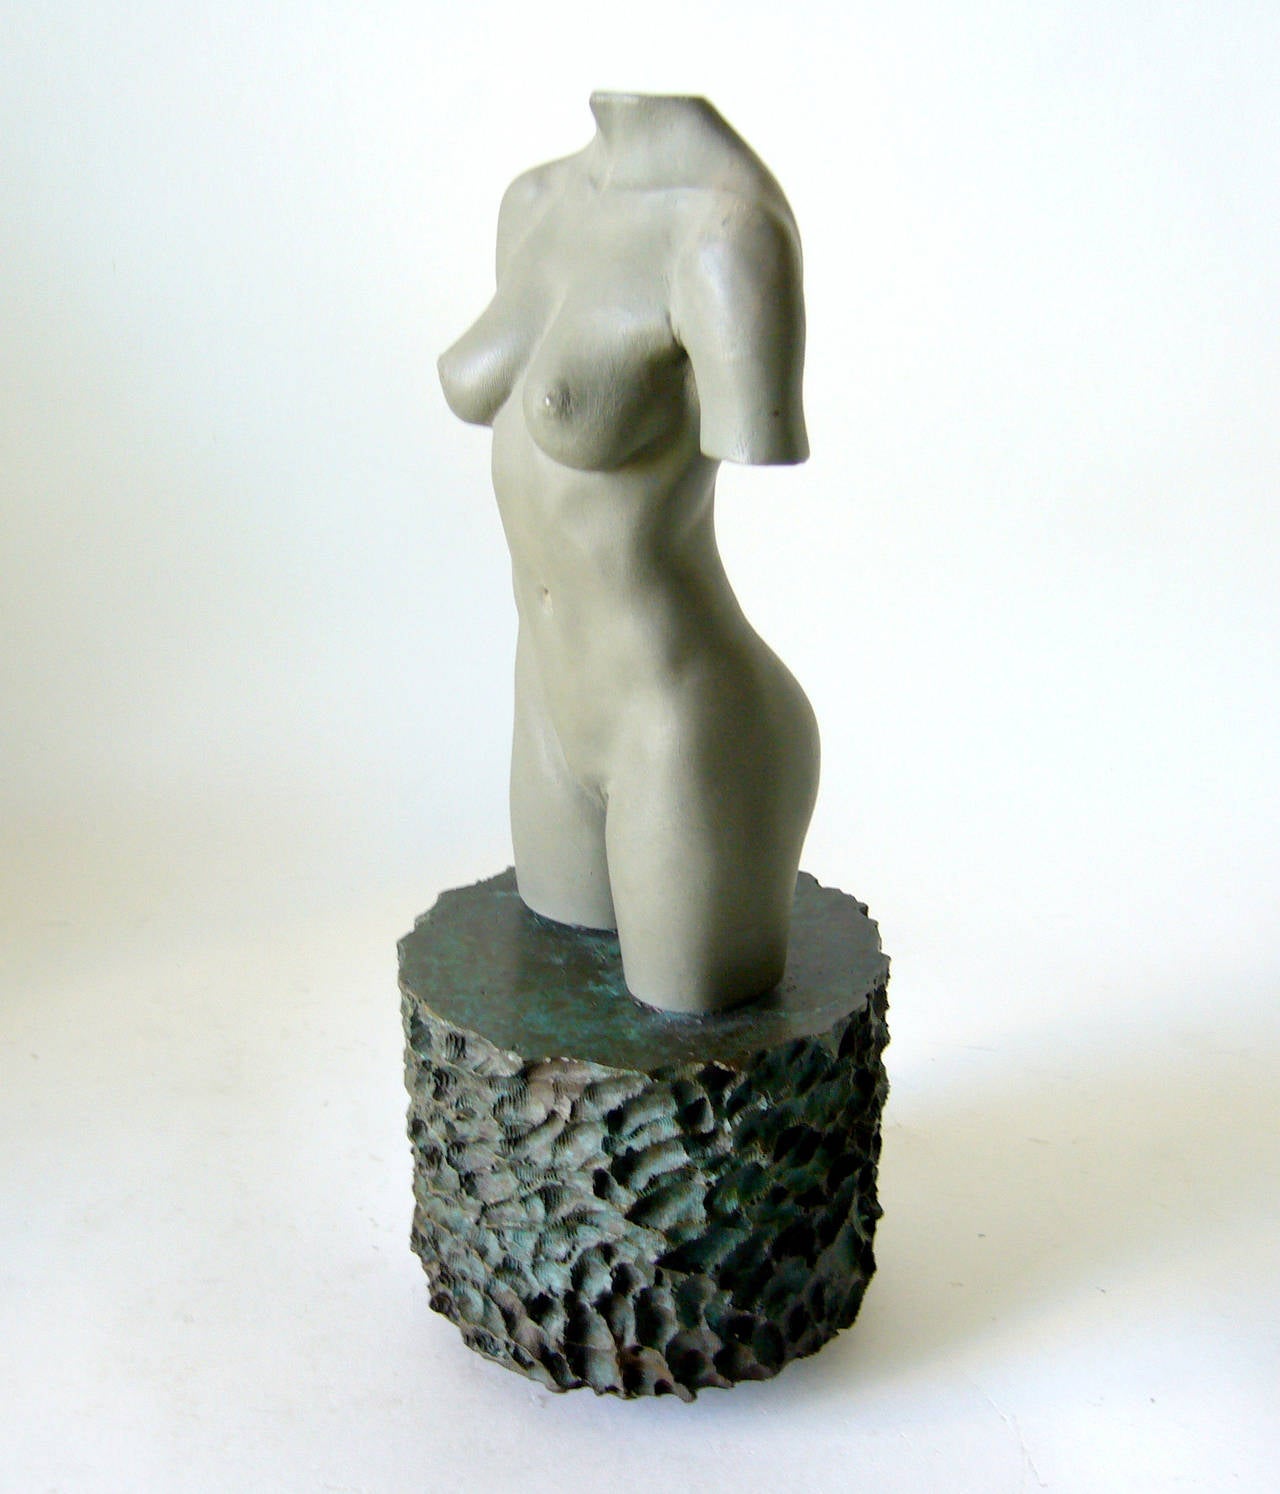 A bronze nude torso sculpture created by artist Robert Graham. Sculpture measures 11